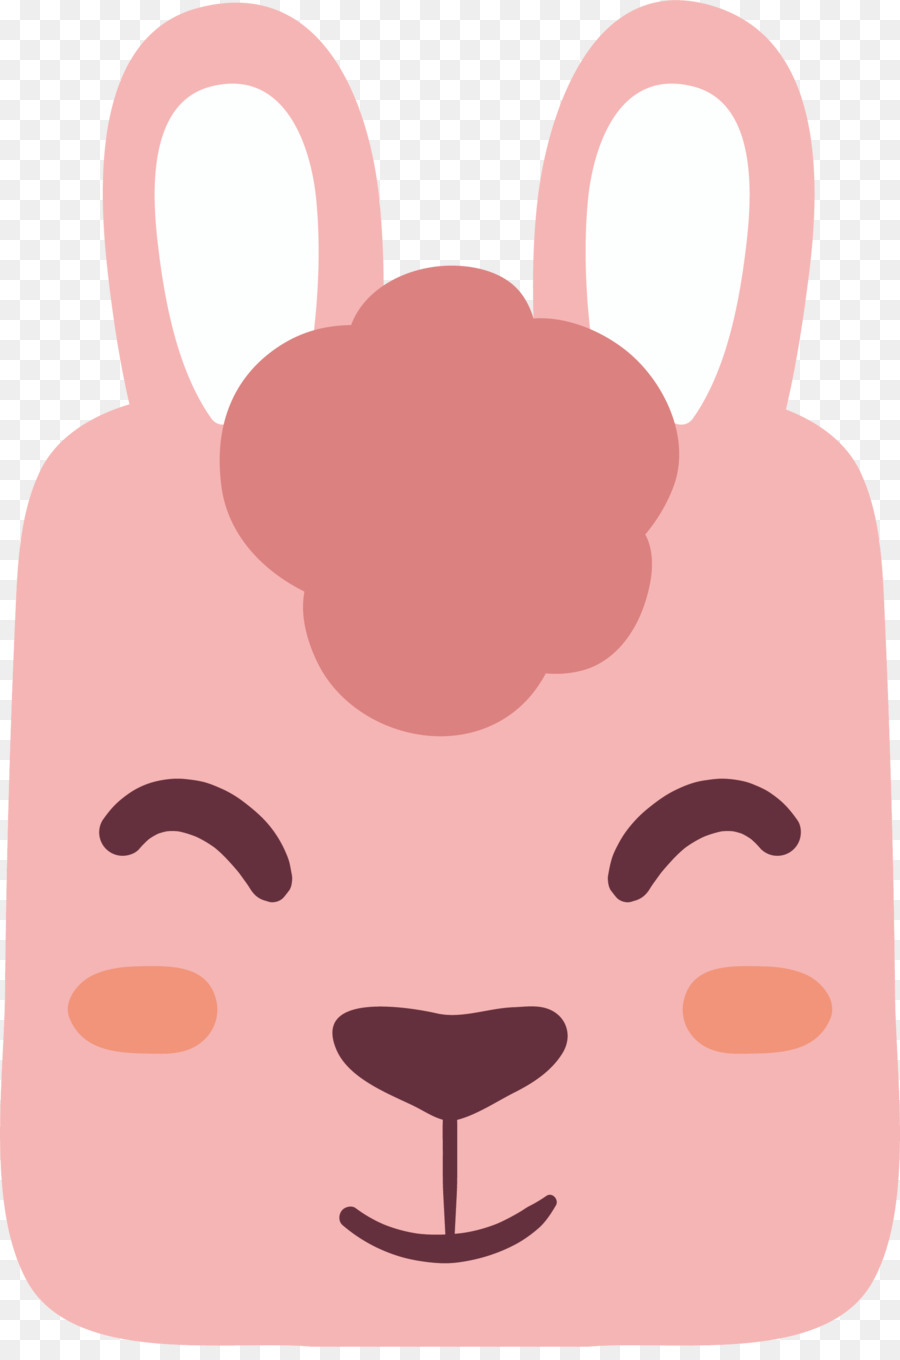 Rentiere clipart - Rosa lächeln Kaninchen